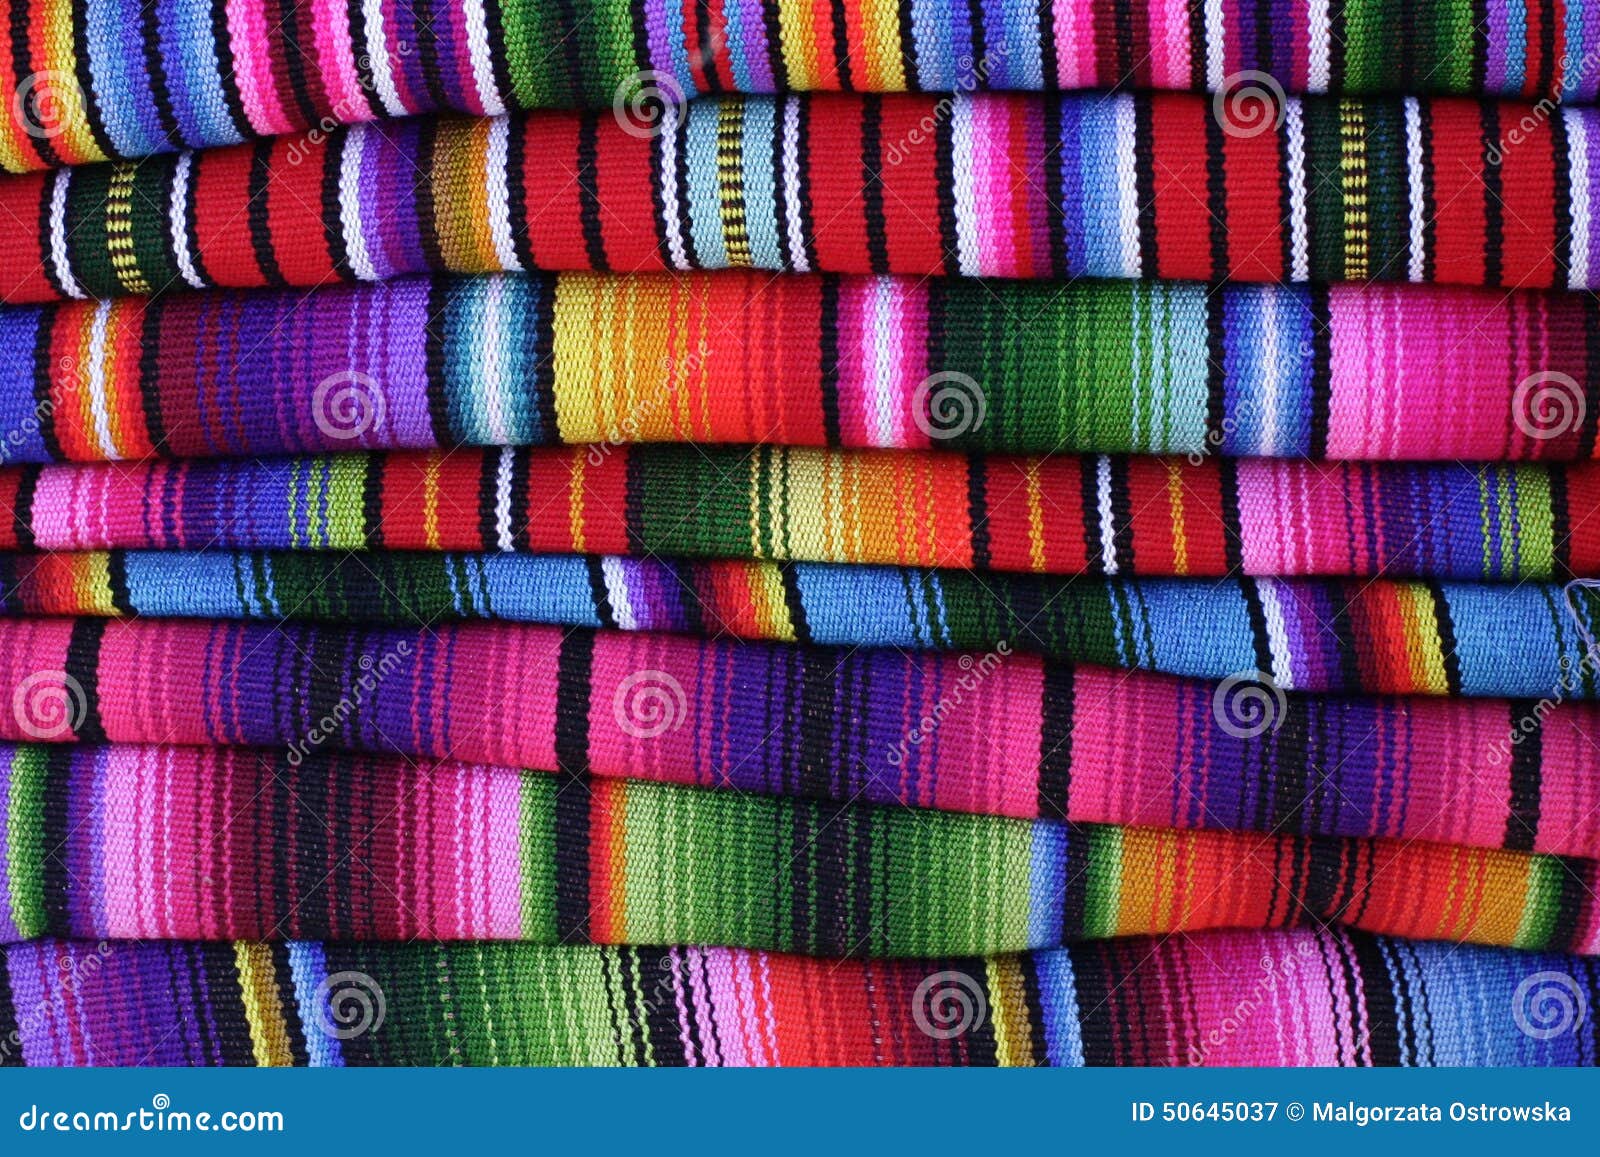 guatemalan hand-woven blankets